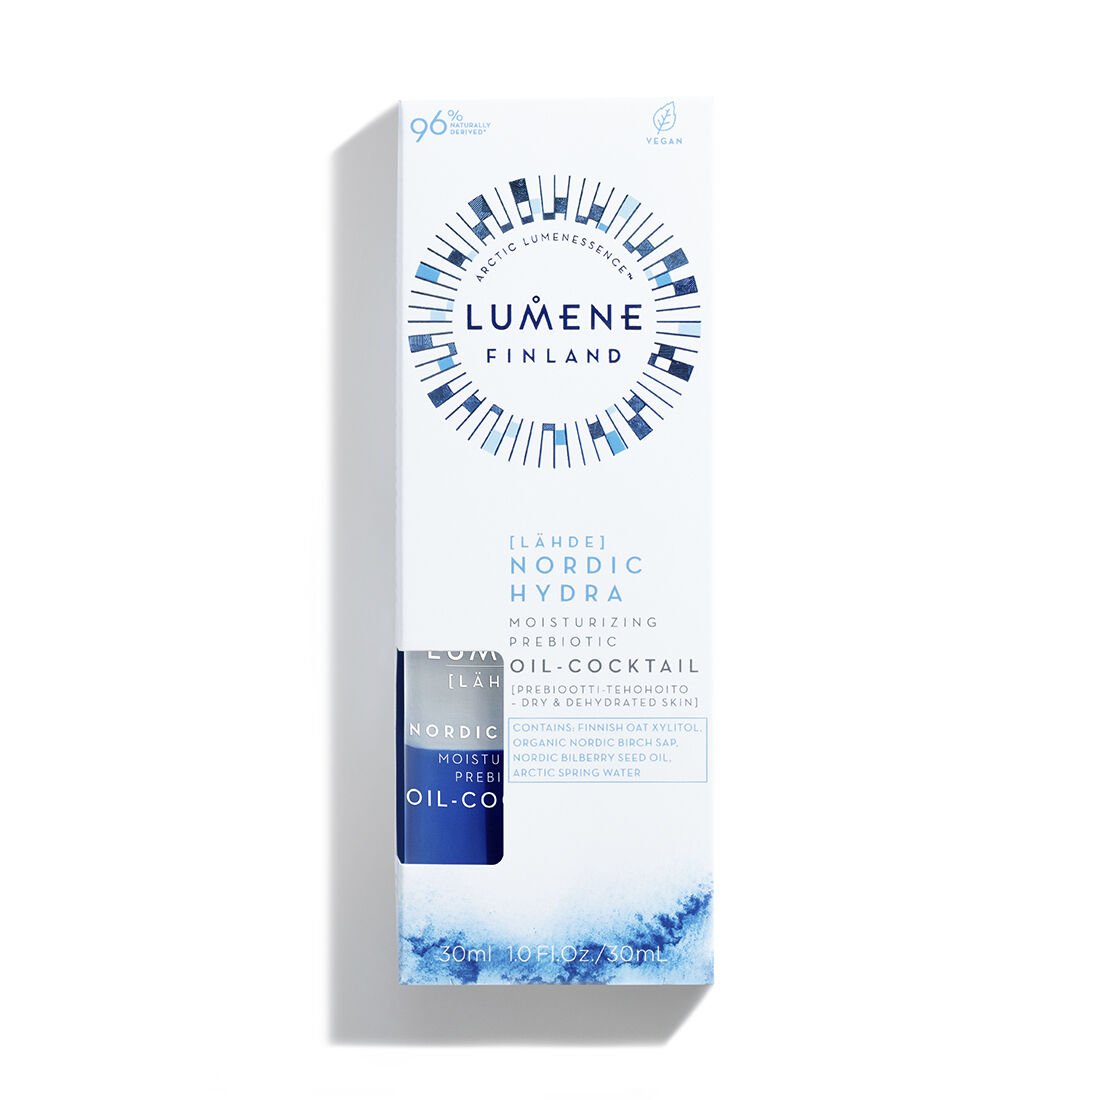 Lumene Nordic Hydra Lähde Moisturizing Prebiotic Oil-Cocktail 30 ml